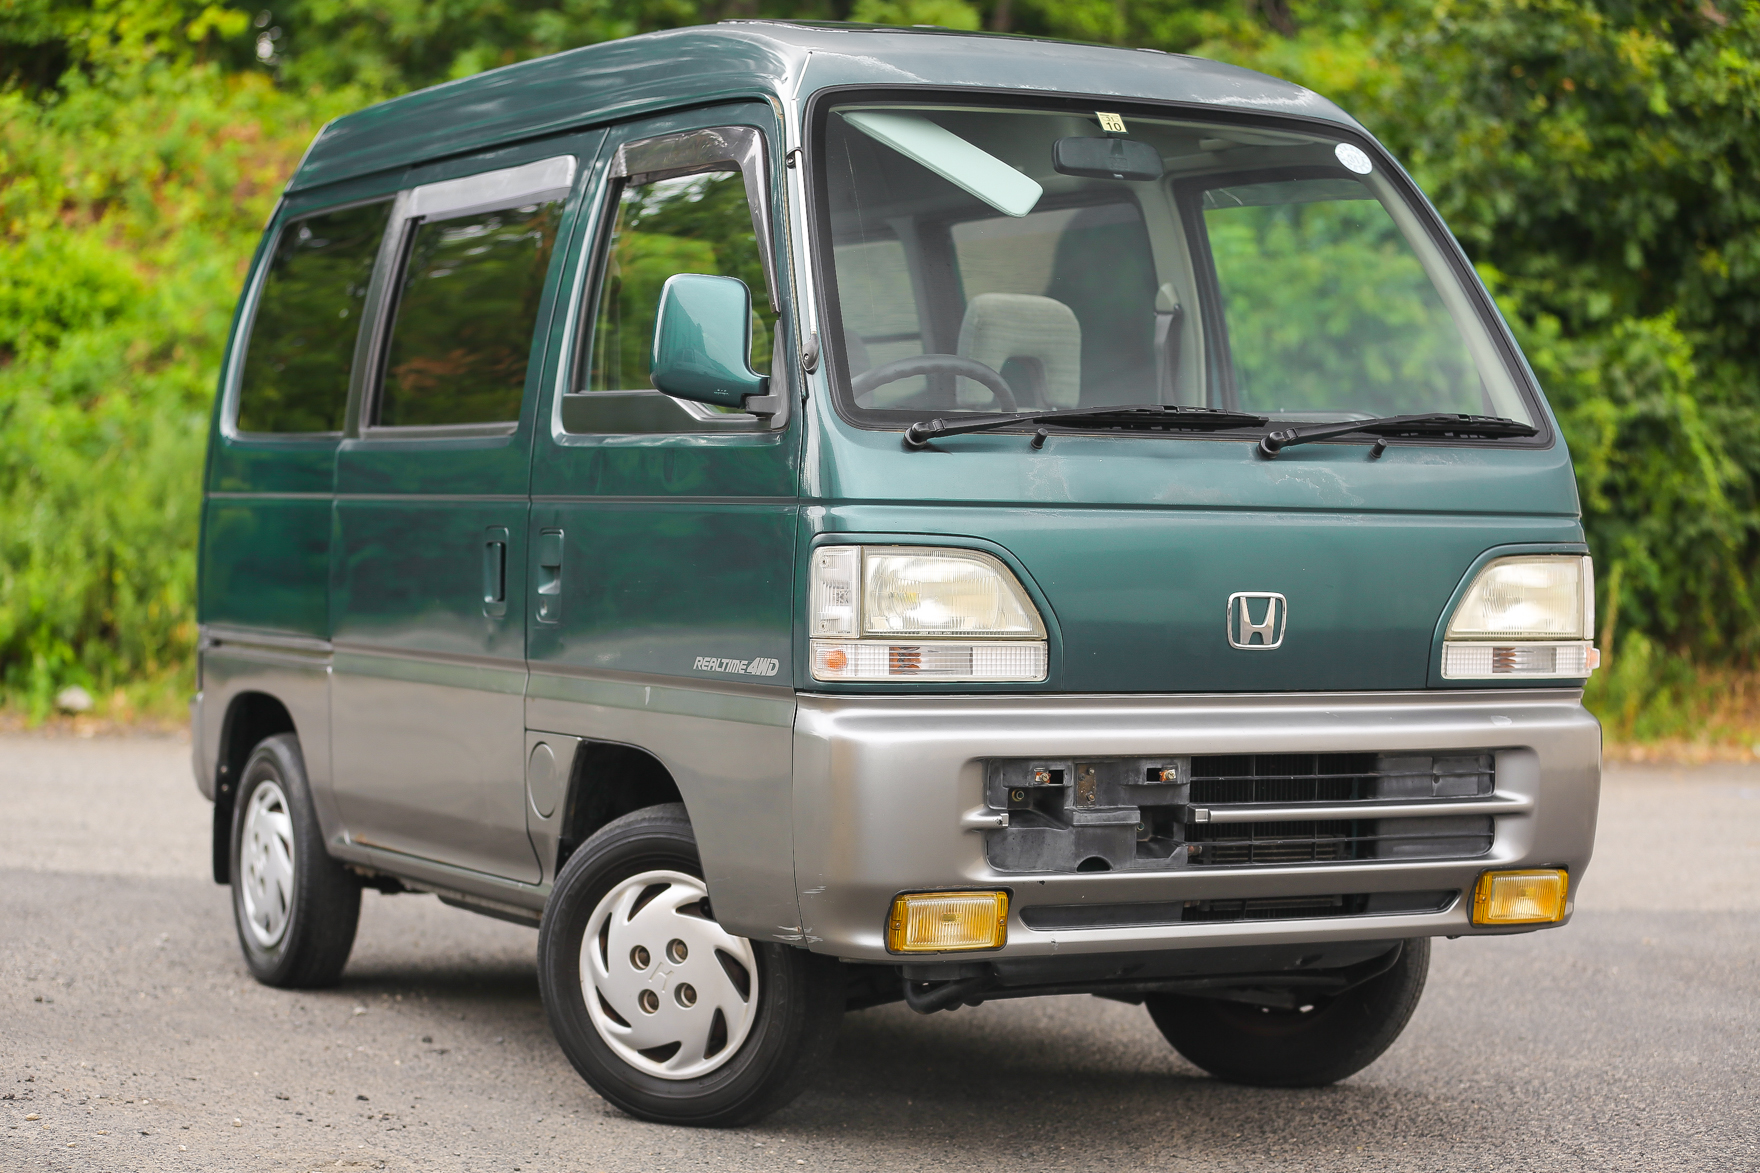 1997 Honda Street Van - Available for $8,750